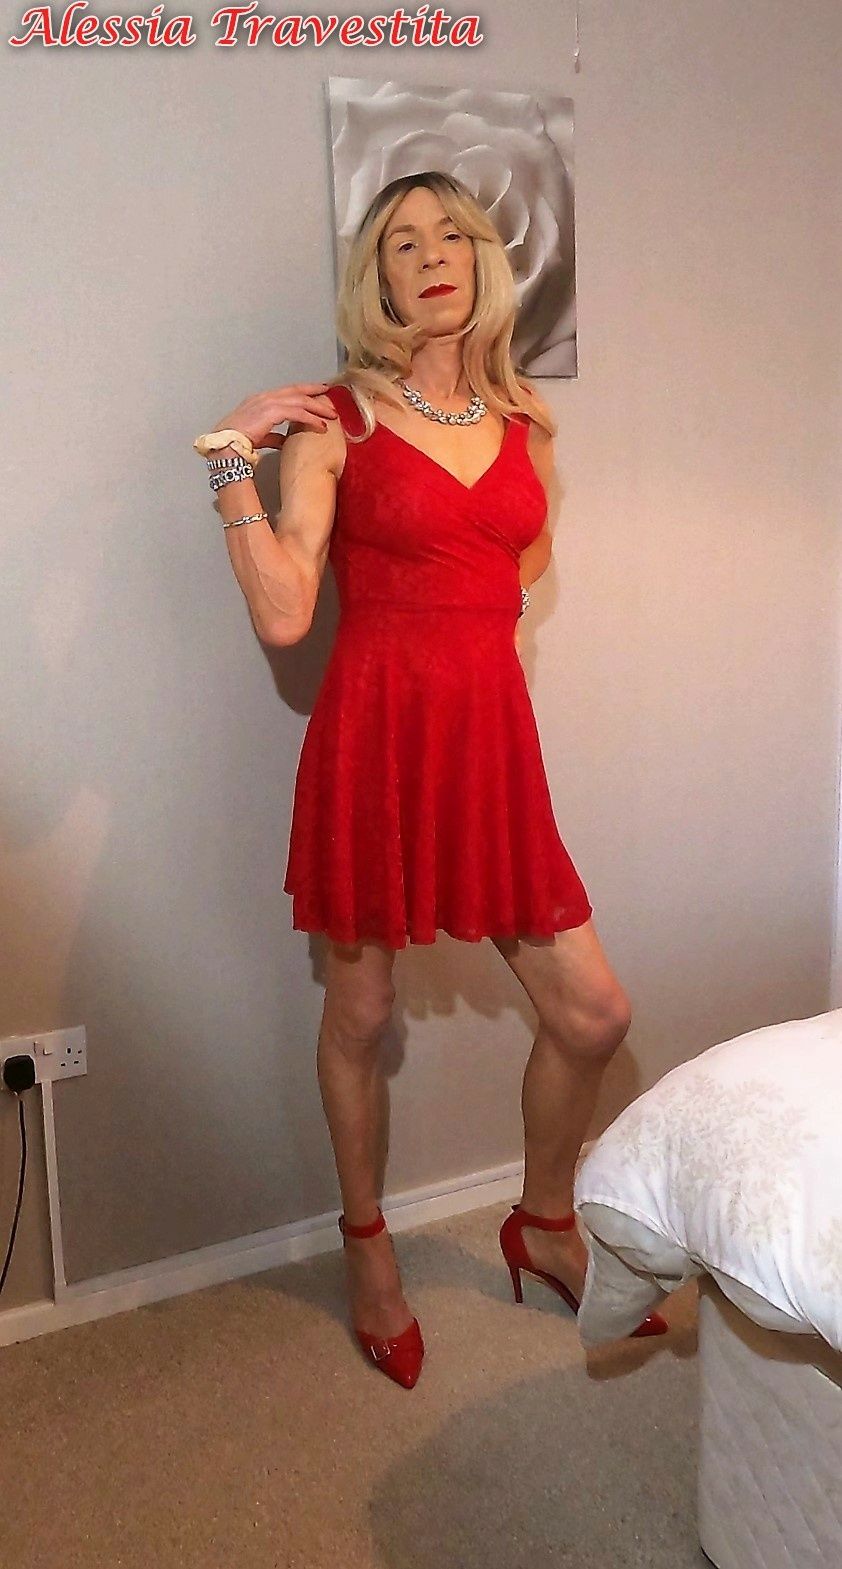 65 Alessia Travestita in Flirty Red Dress #40